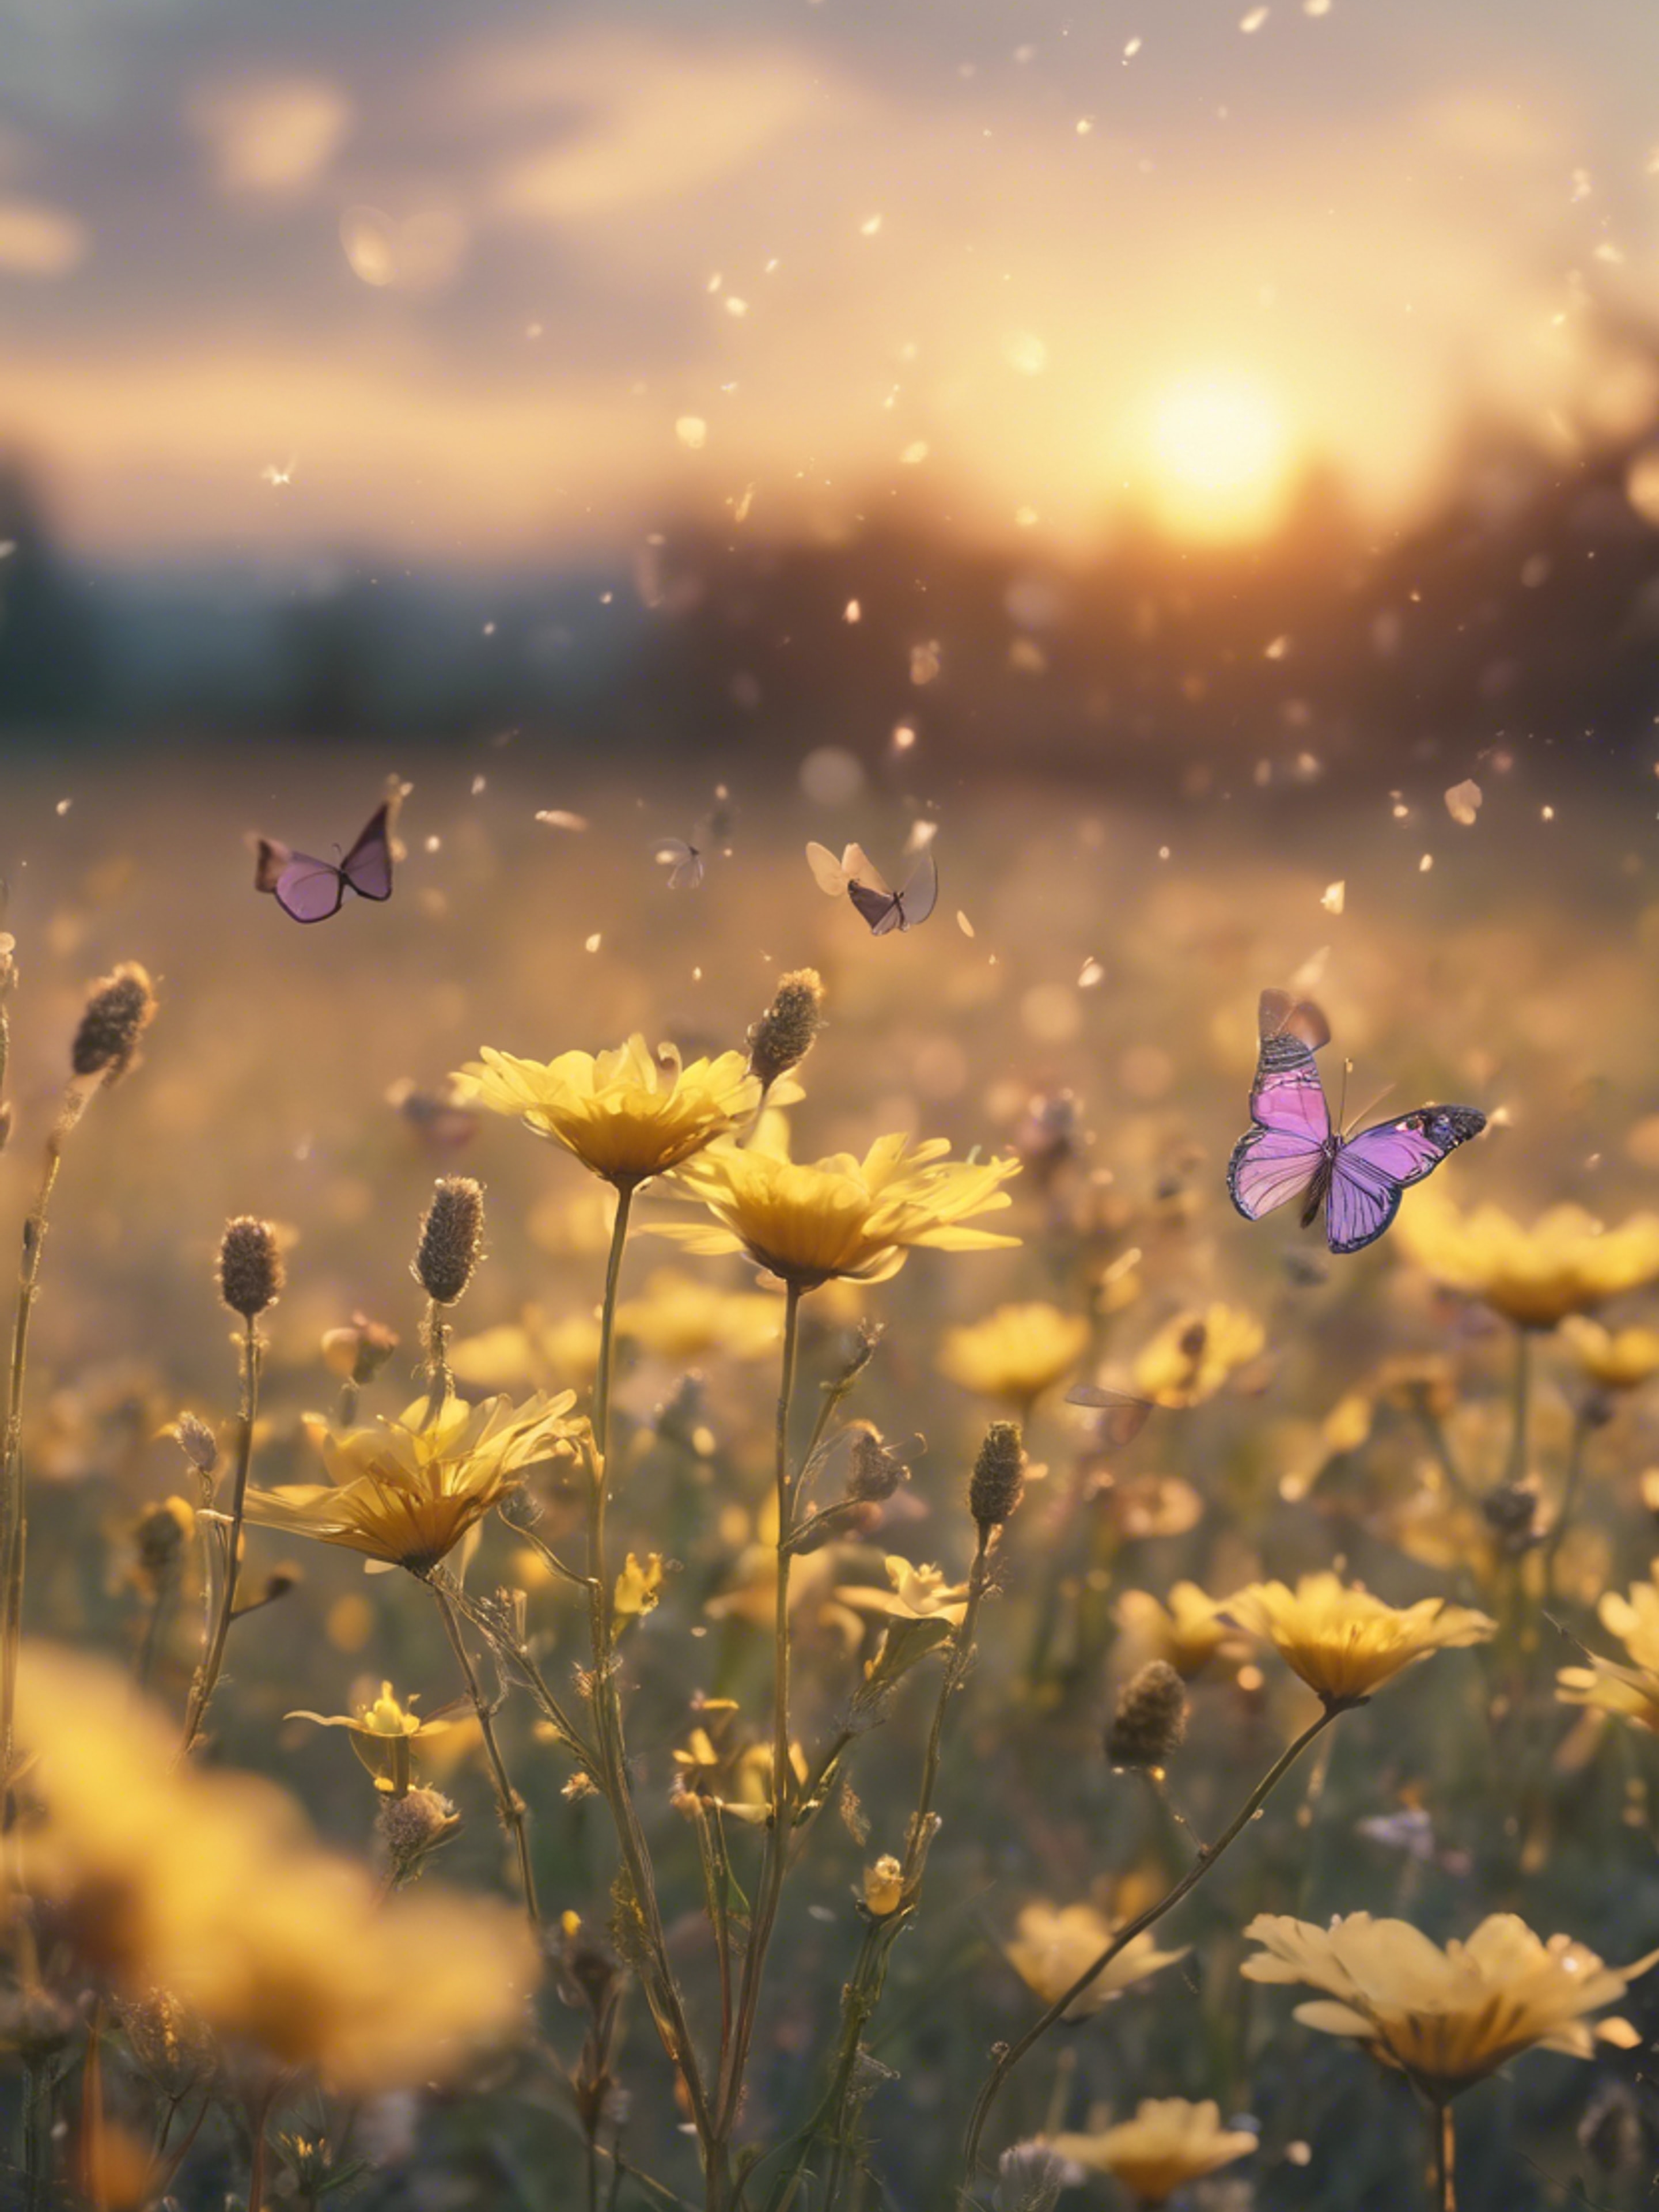 Sunset scene overlooking a meadow filled with pastel yellow flowers and kawaii butterflies fluttering above them. Tapeta na zeď[4de922e1f50d428d8d1a]